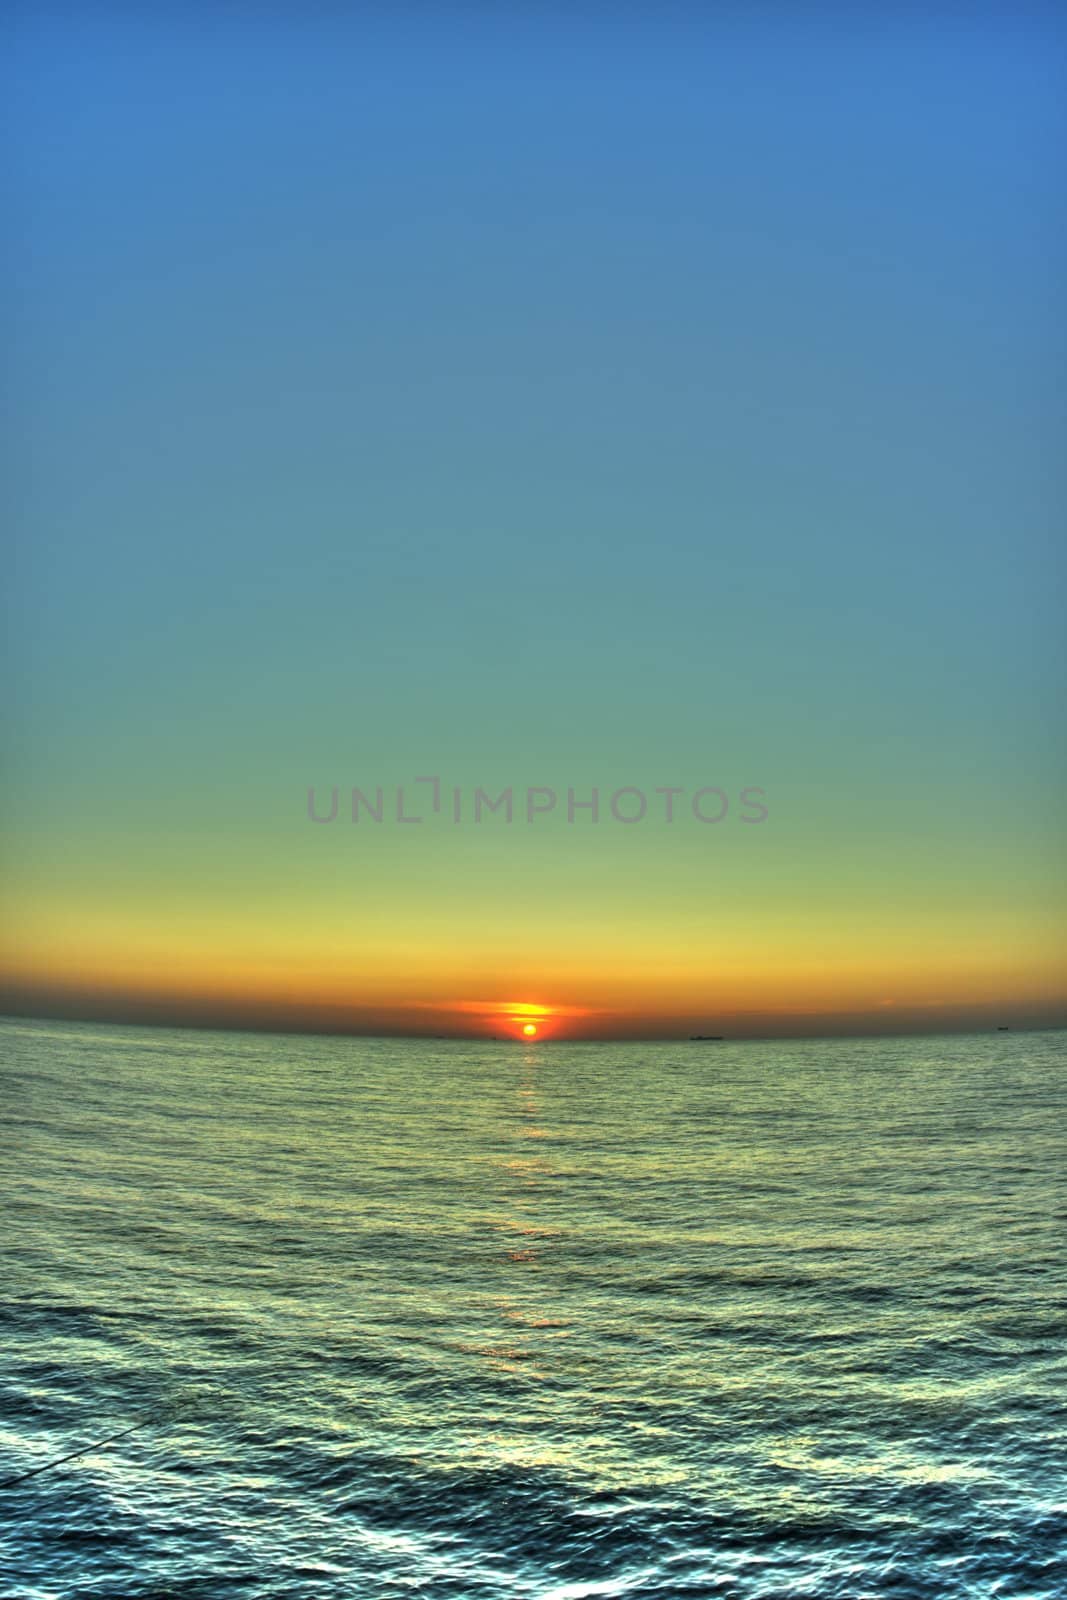 Sunset in Polish Baltic Sea